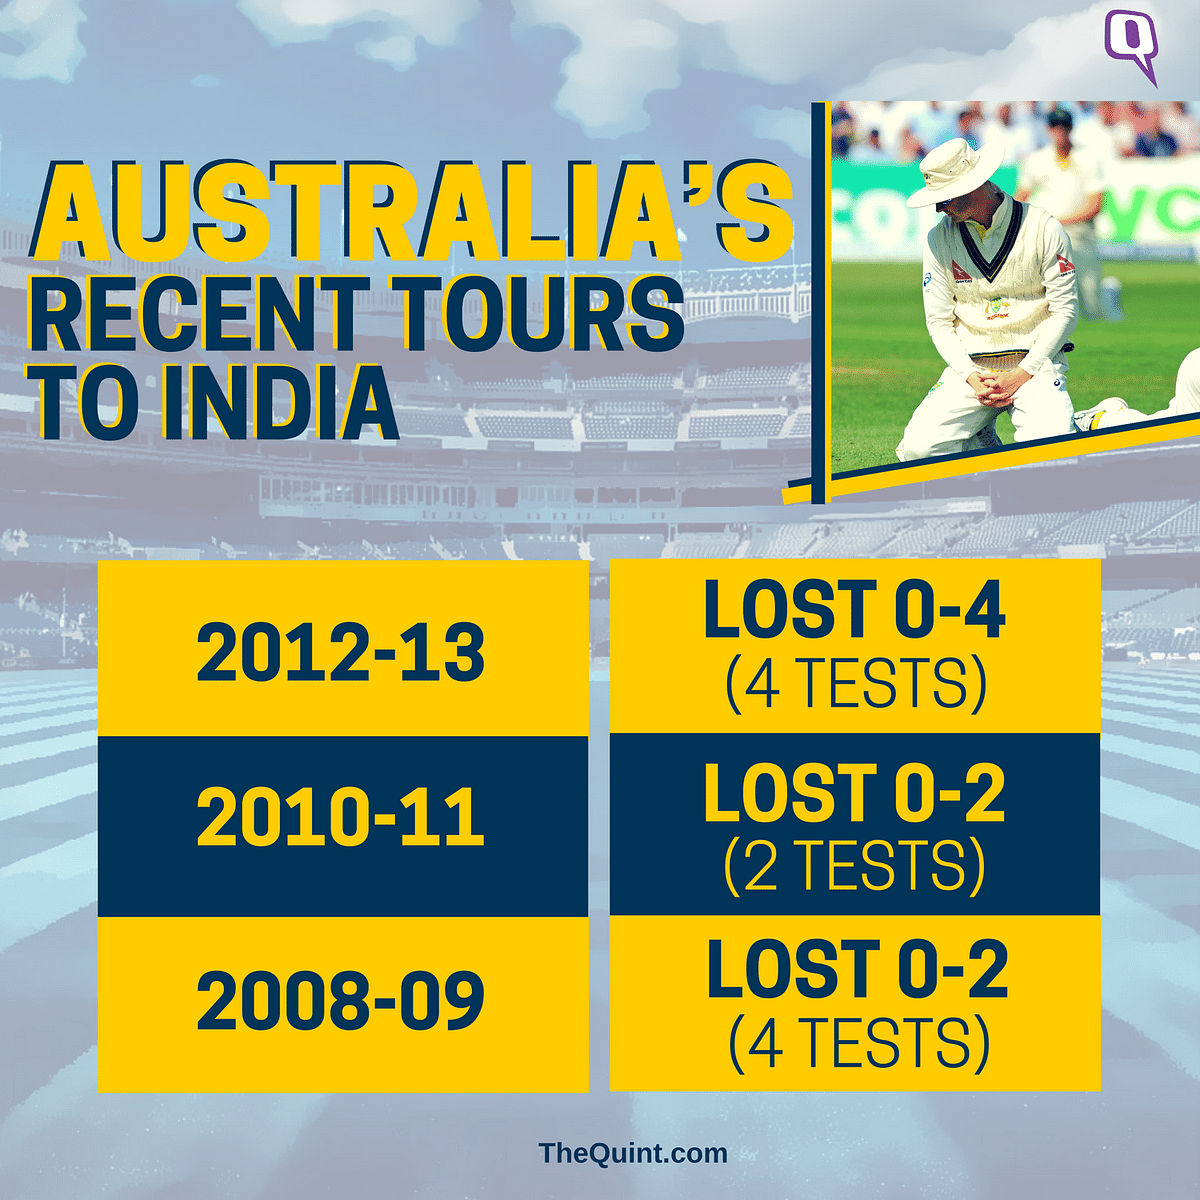 Australia last won a Test match in India in 2008.